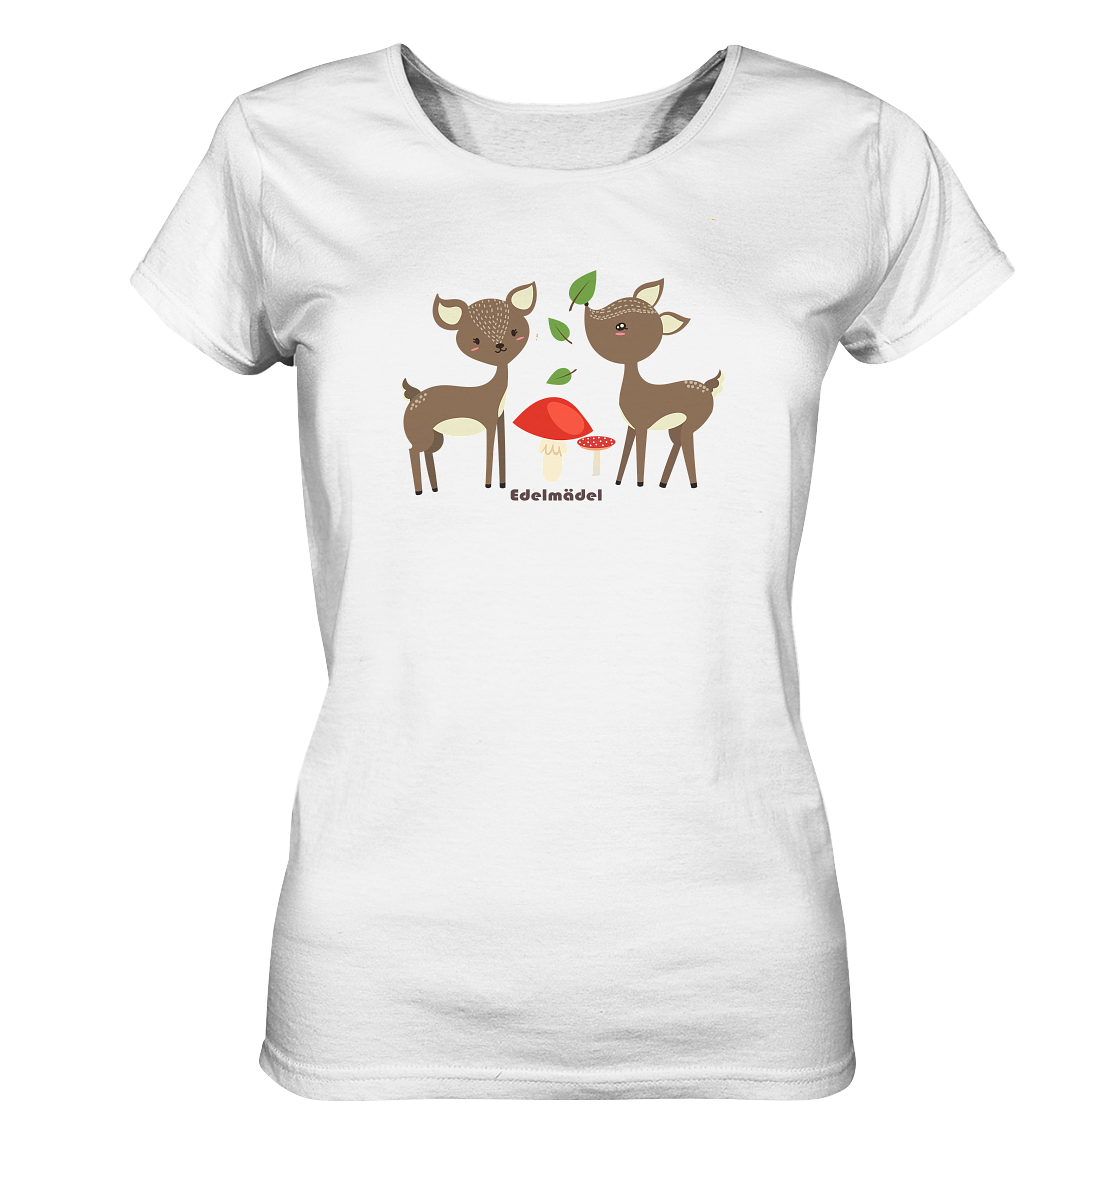 Edelmädel Organic Shirt - Bambi - viele Farben